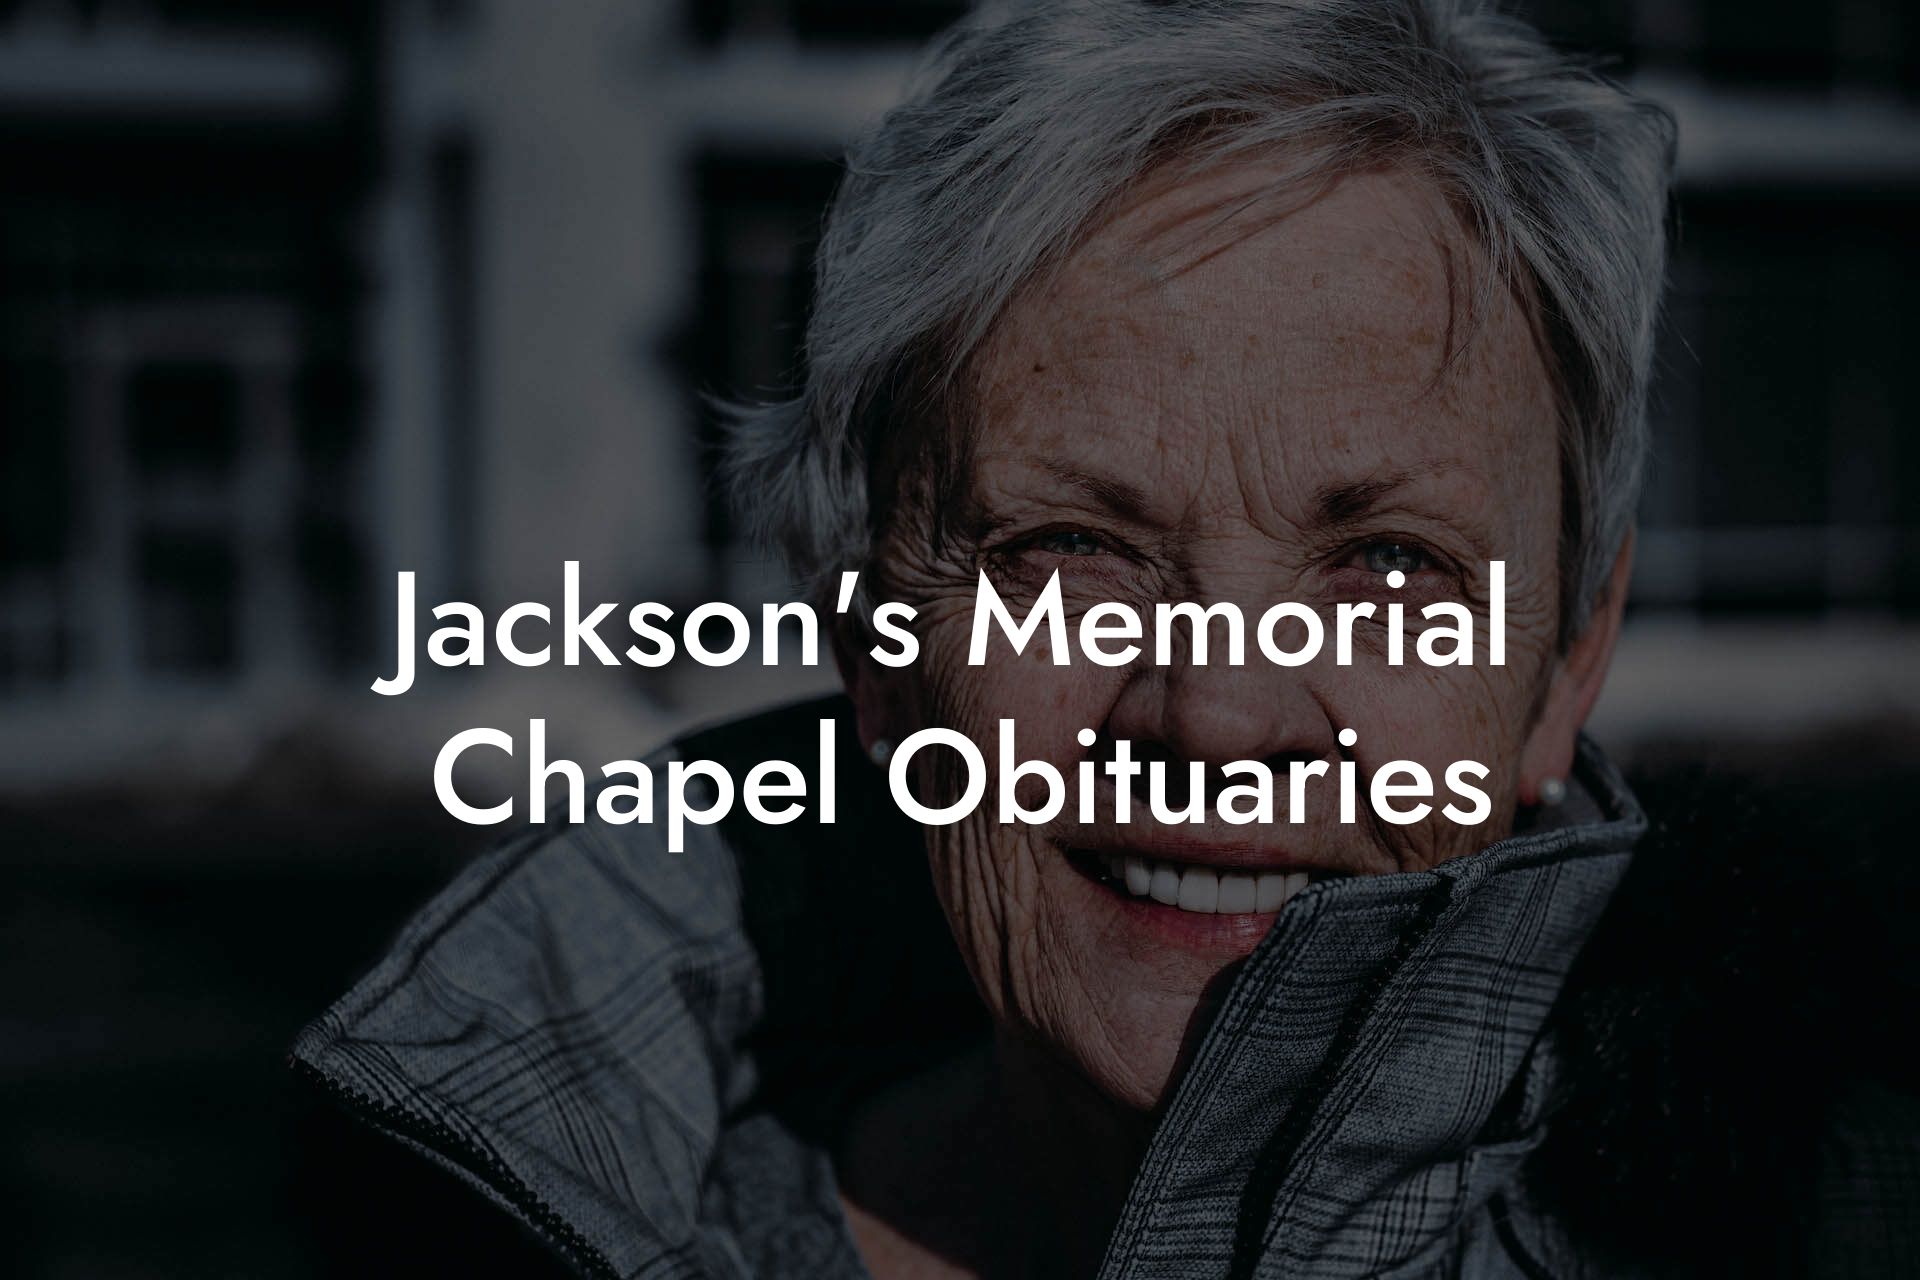 Jackson's Memorial Chapel Obituaries